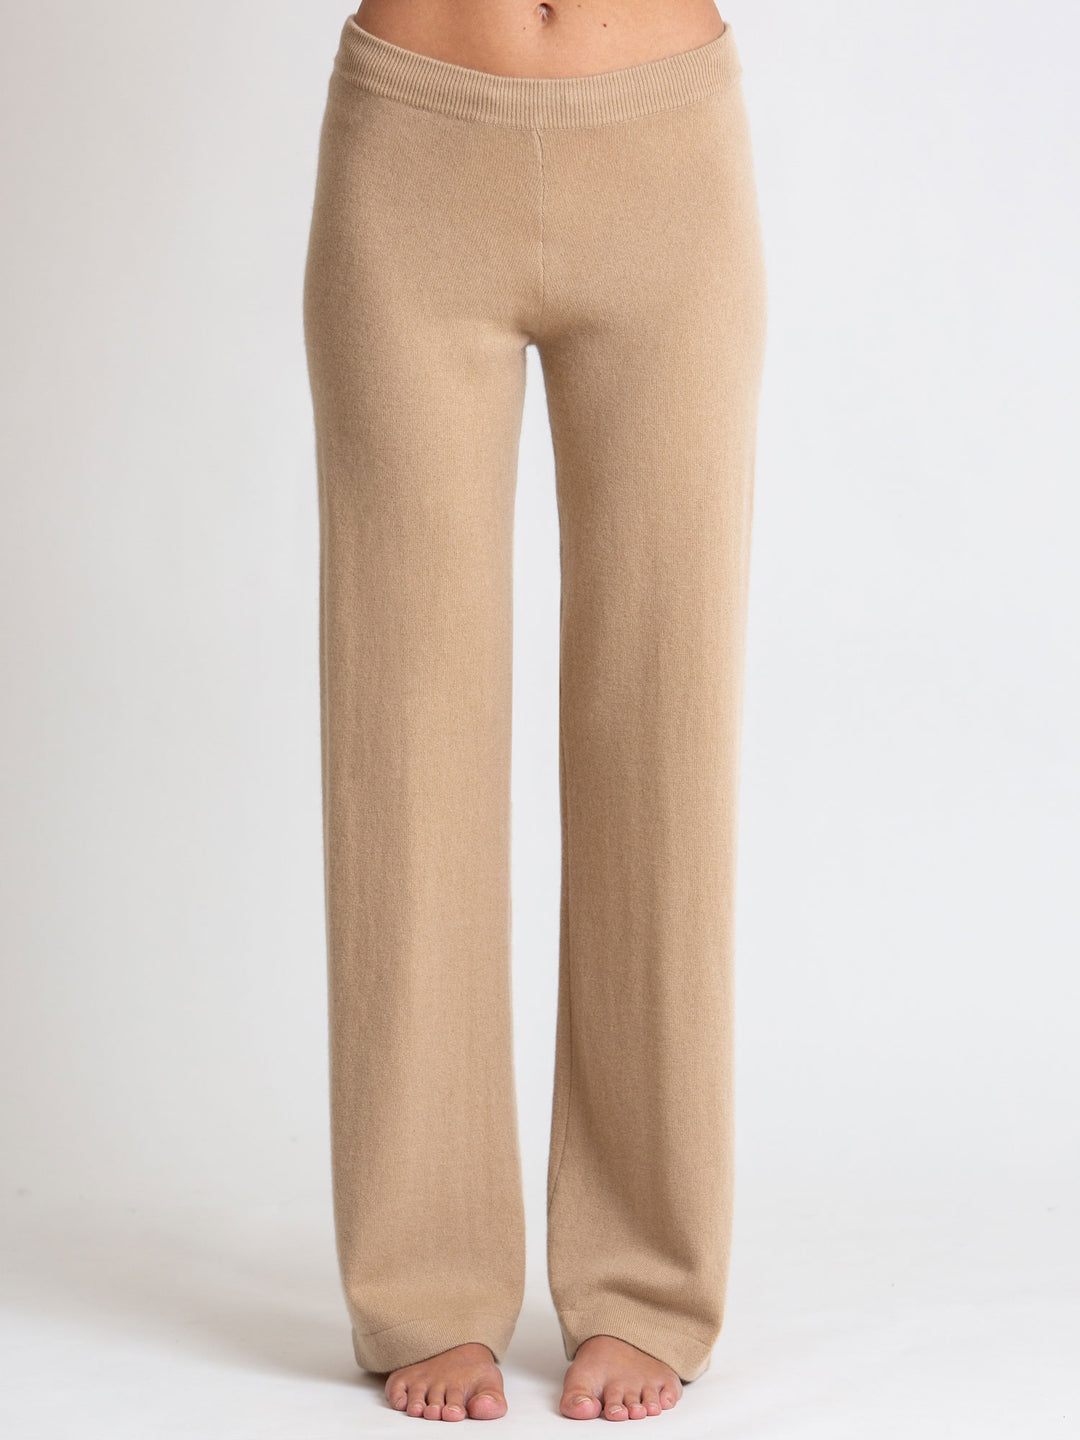  Pulcykp Women Cashmere Pants Soft Comfortable High